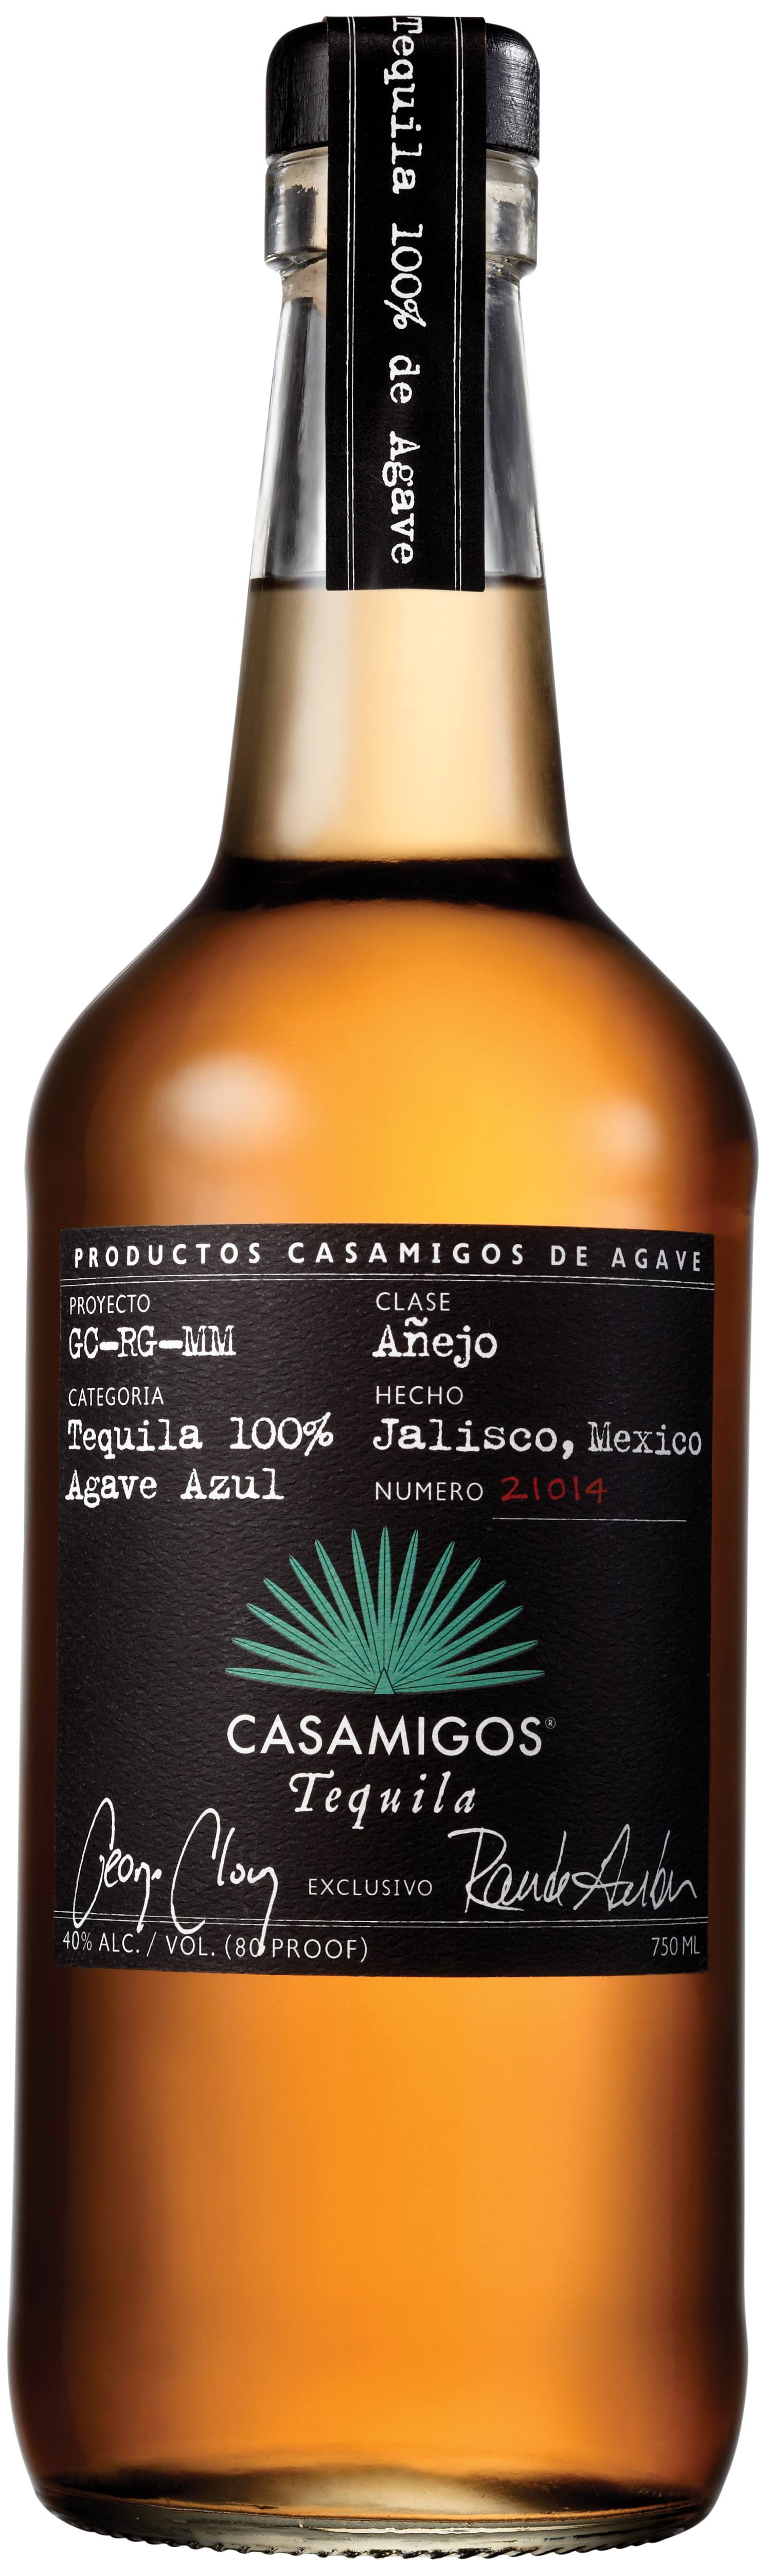 Casamigos Tequila, Anejo - 750 ml